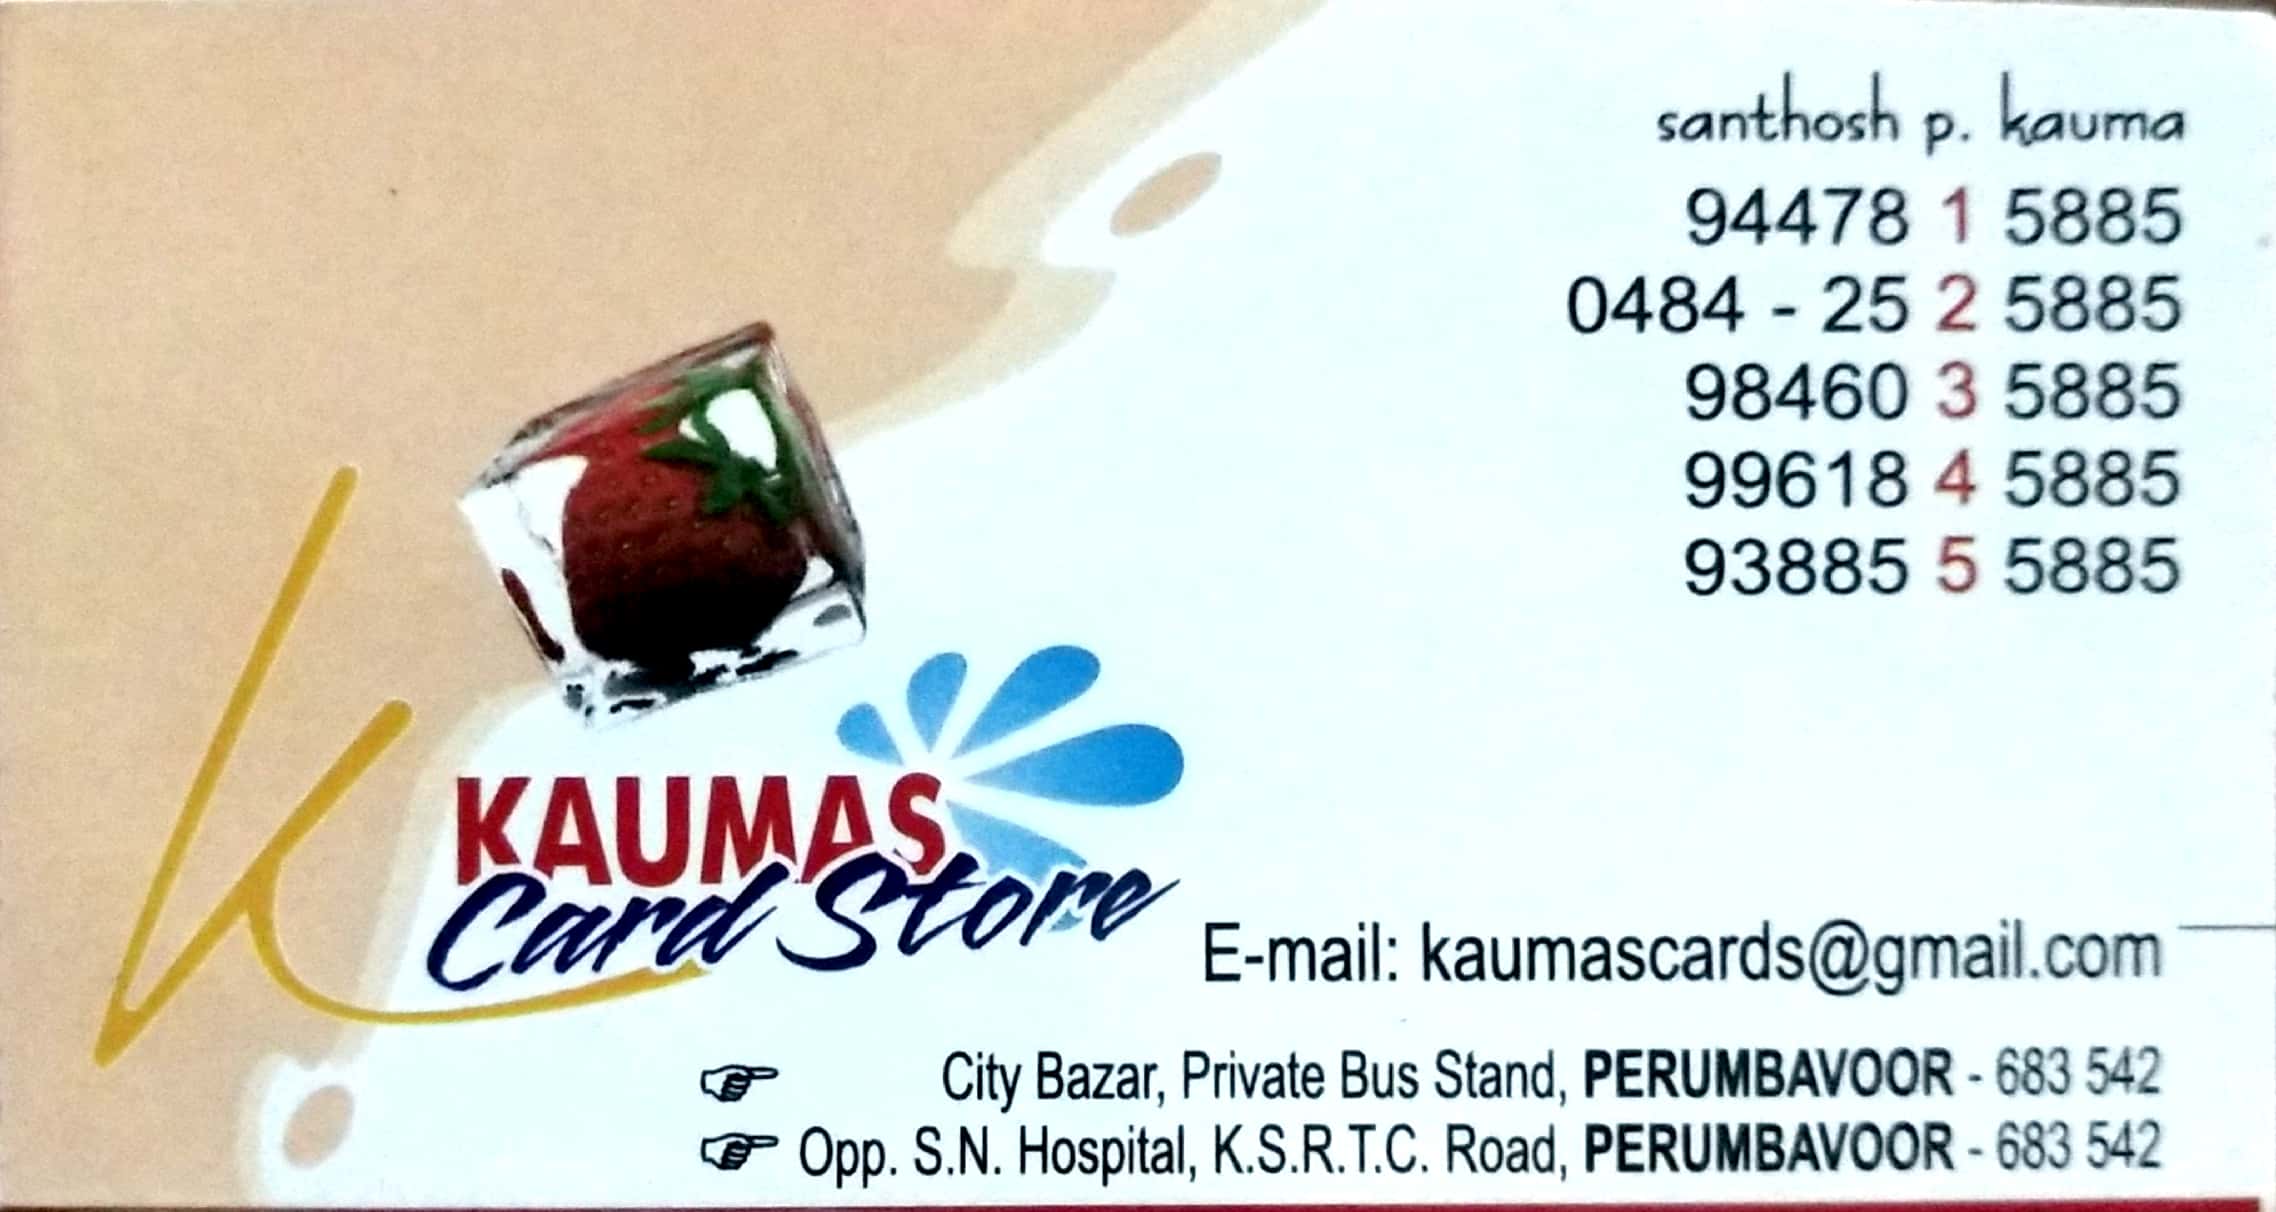 KAUMAS Card Store, PRINTING PRESS,  service in Thrippunithura, Ernakulam